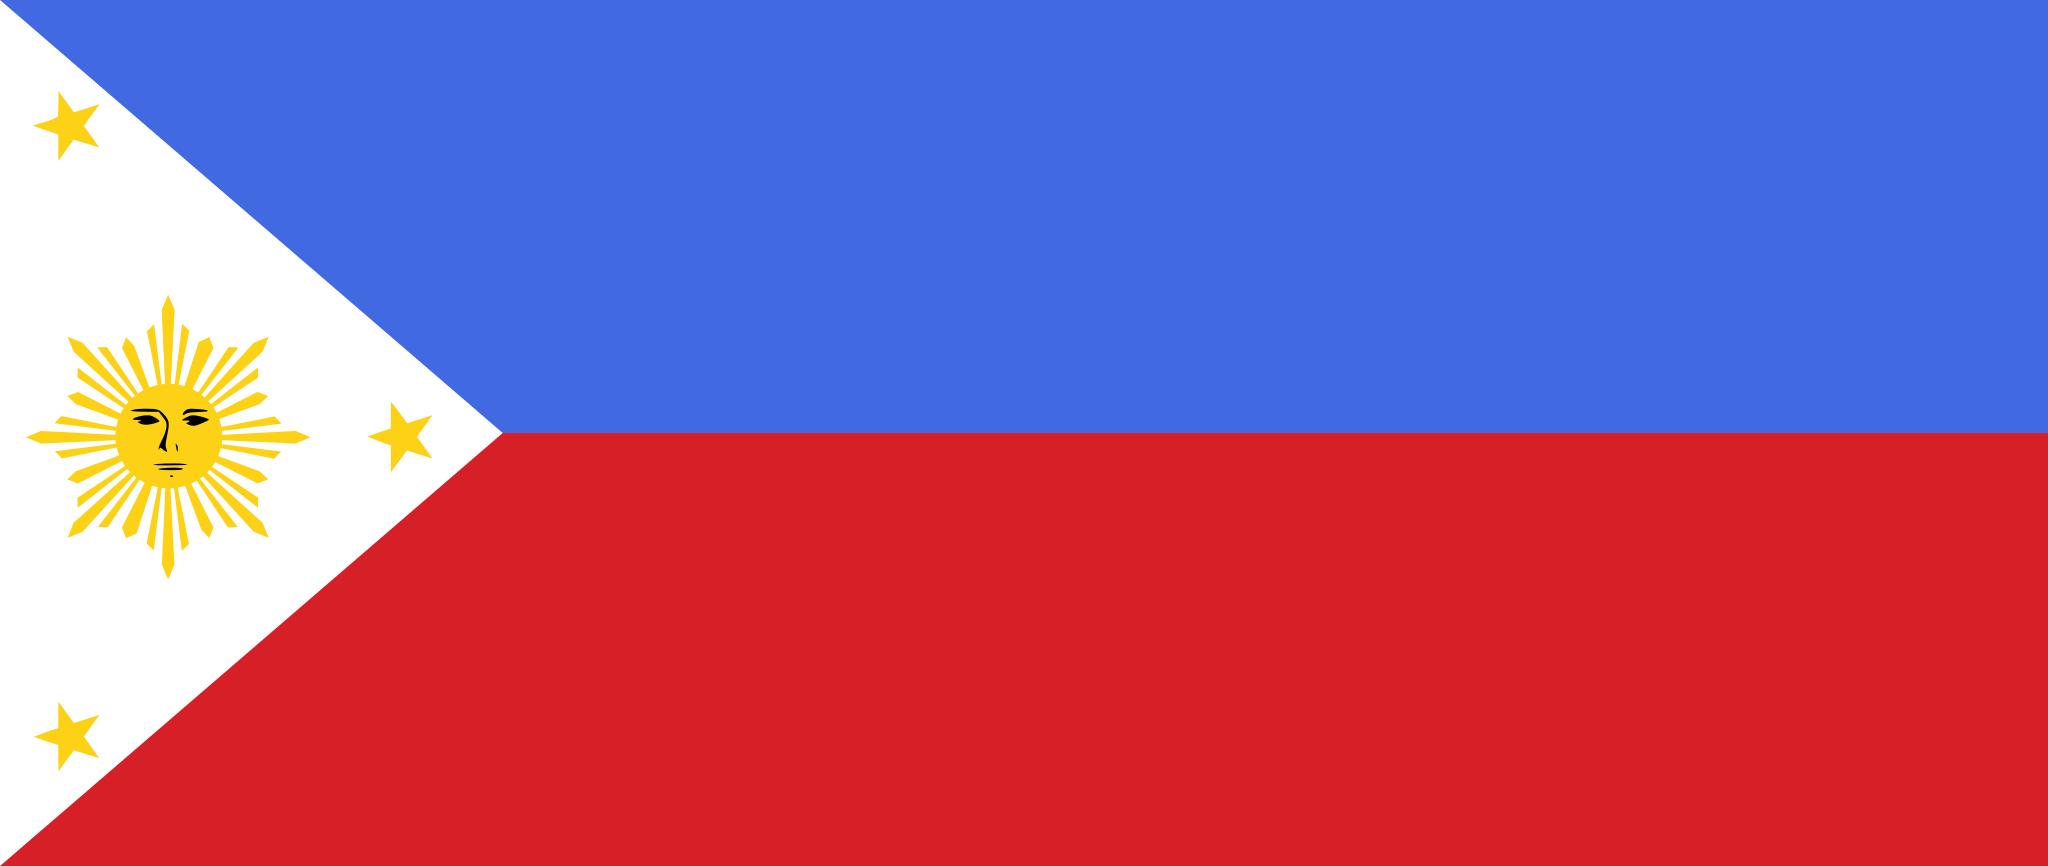 Download Free Images - philippines flag original svg